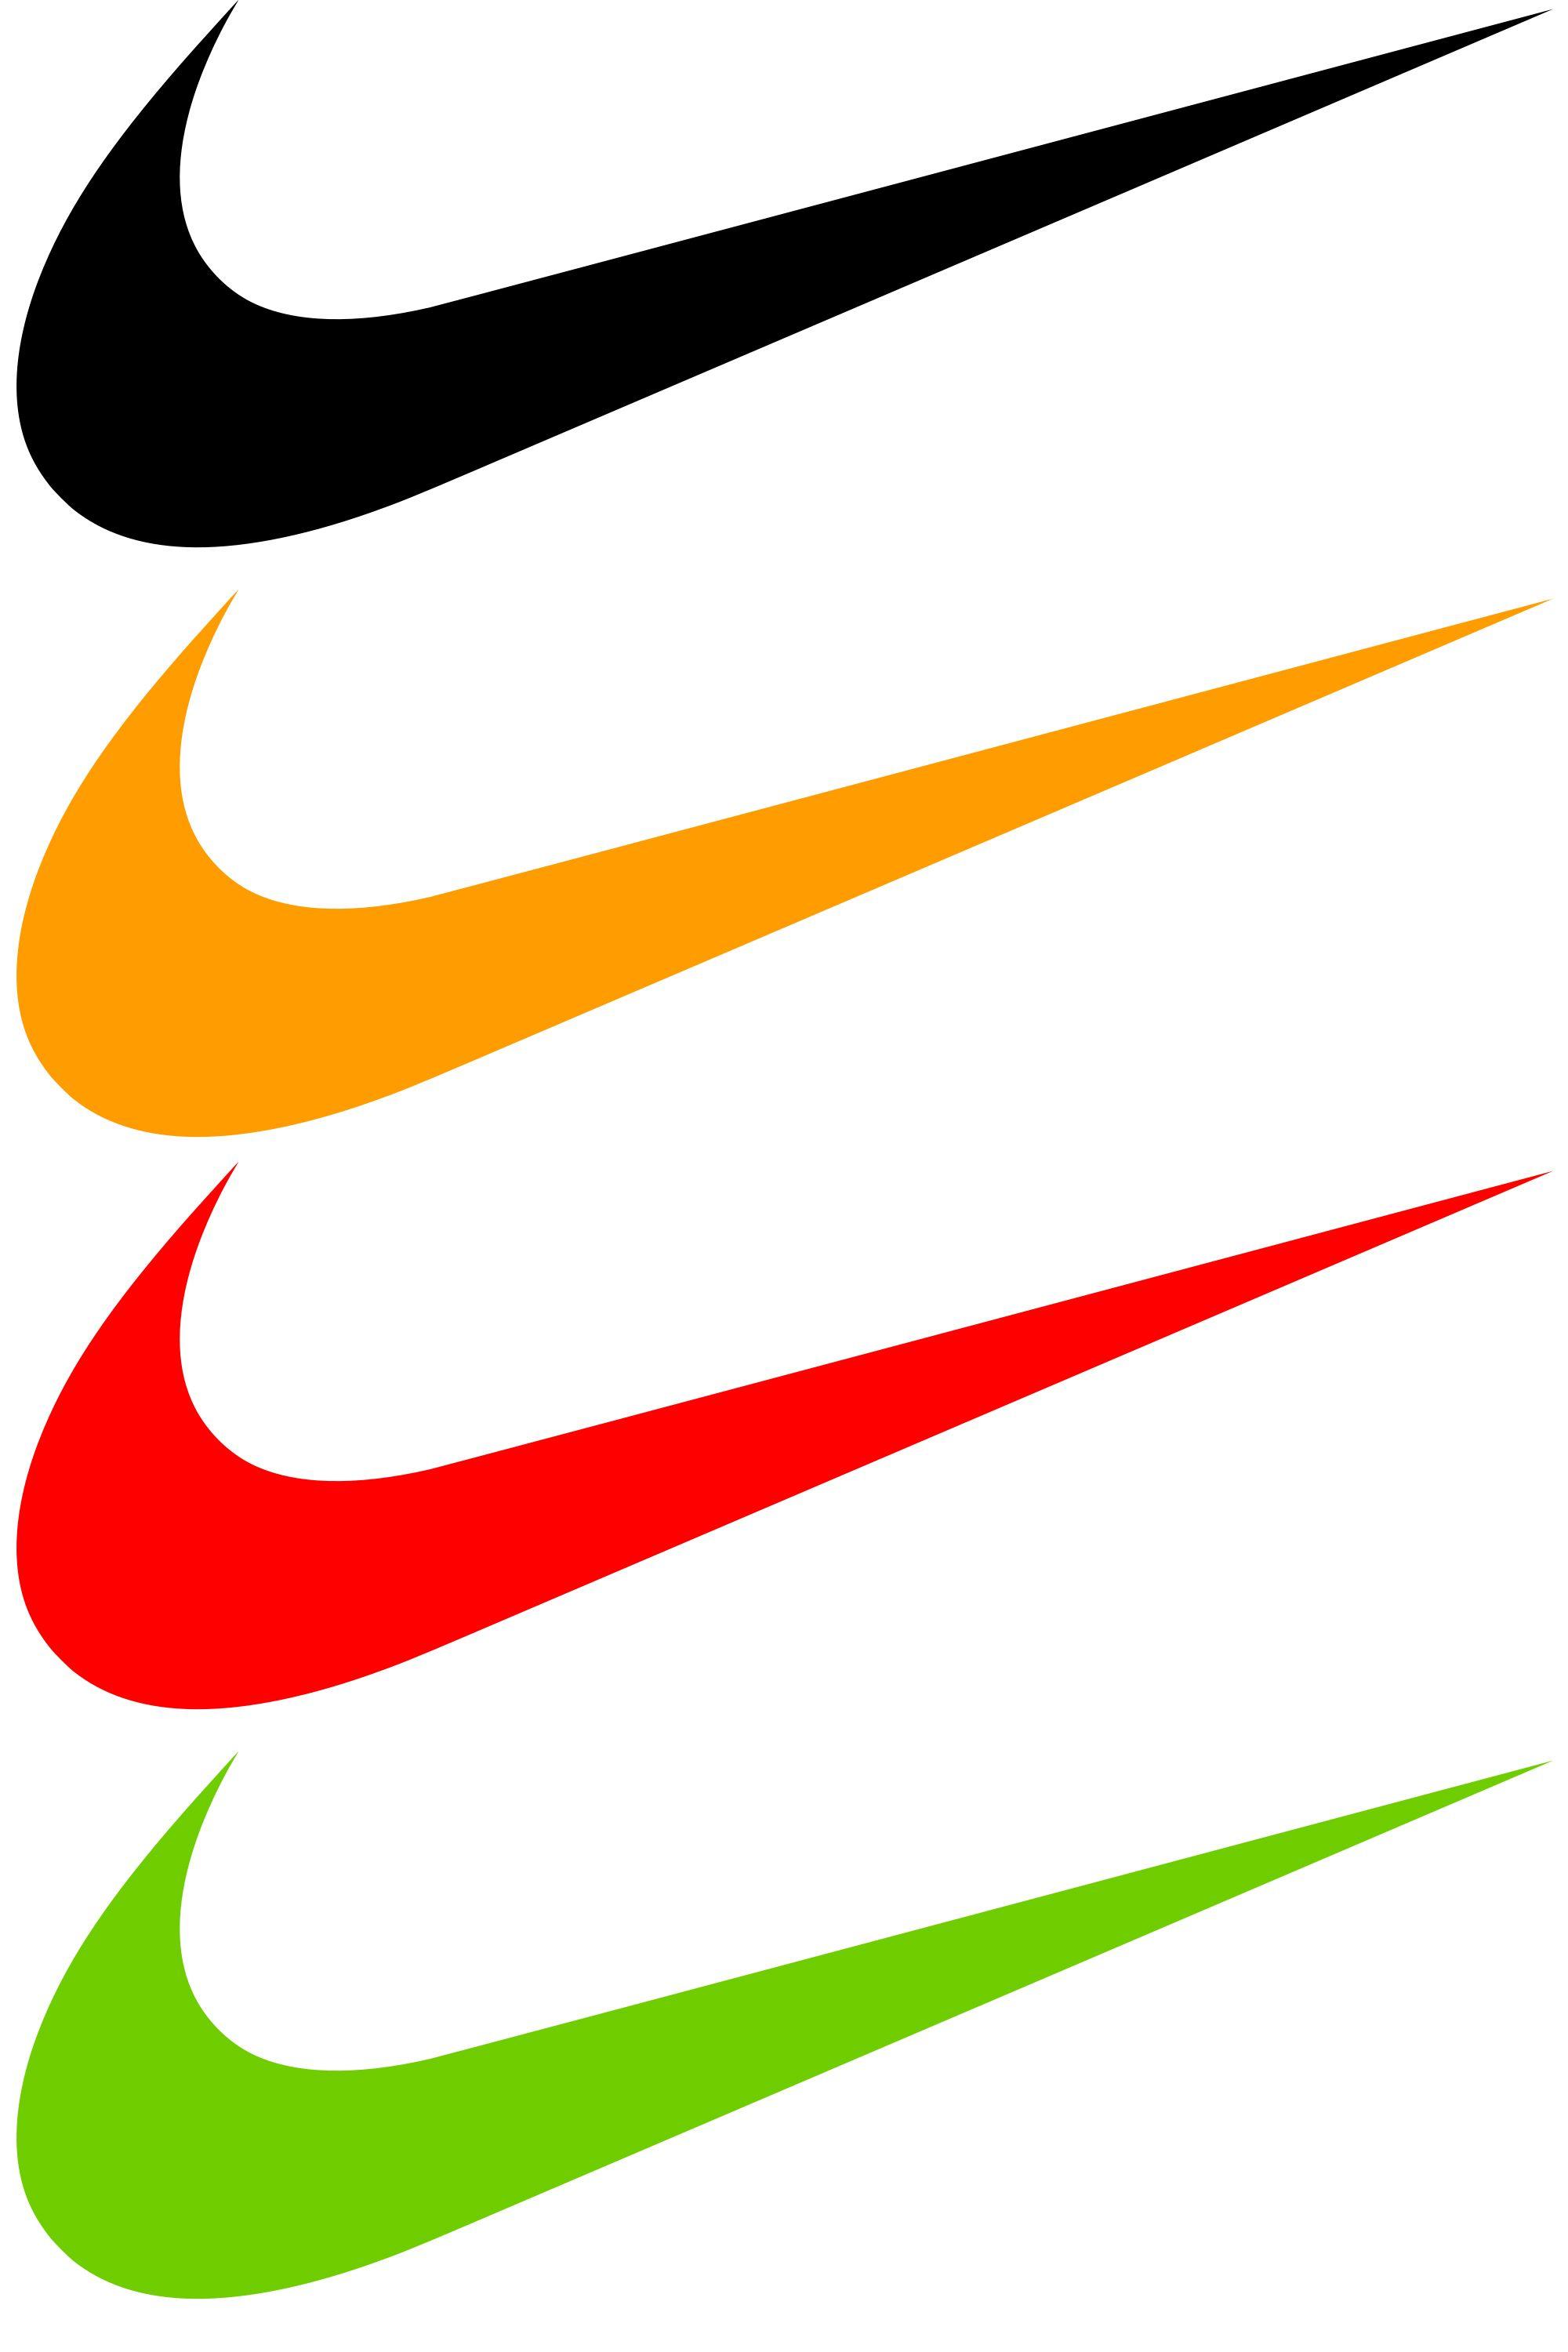 Red White Blue Nike Logo - Nike Logo, Nike Symbol Meaning, History and Evolution